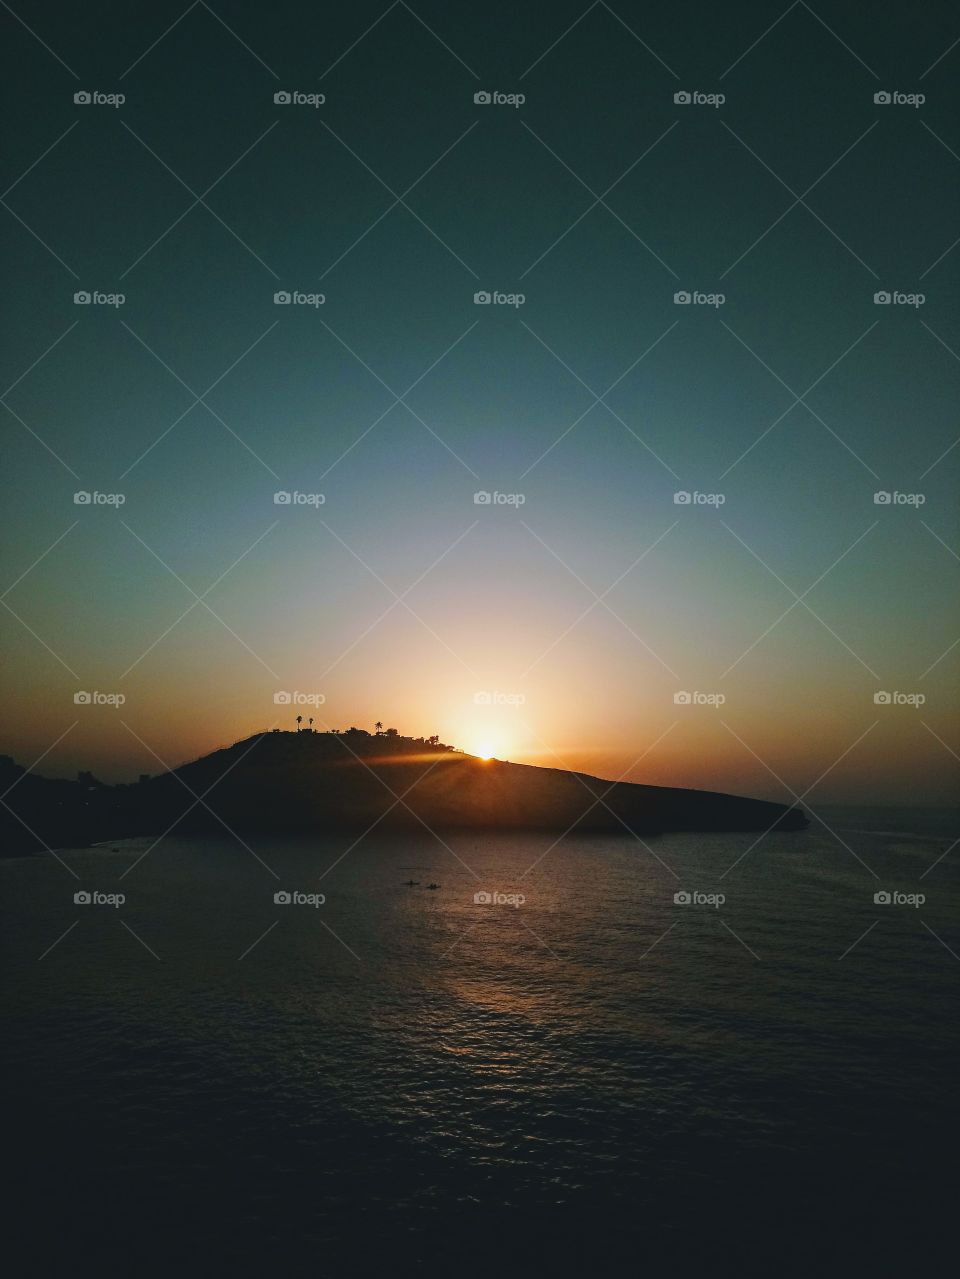 An ordinary Omani sunset